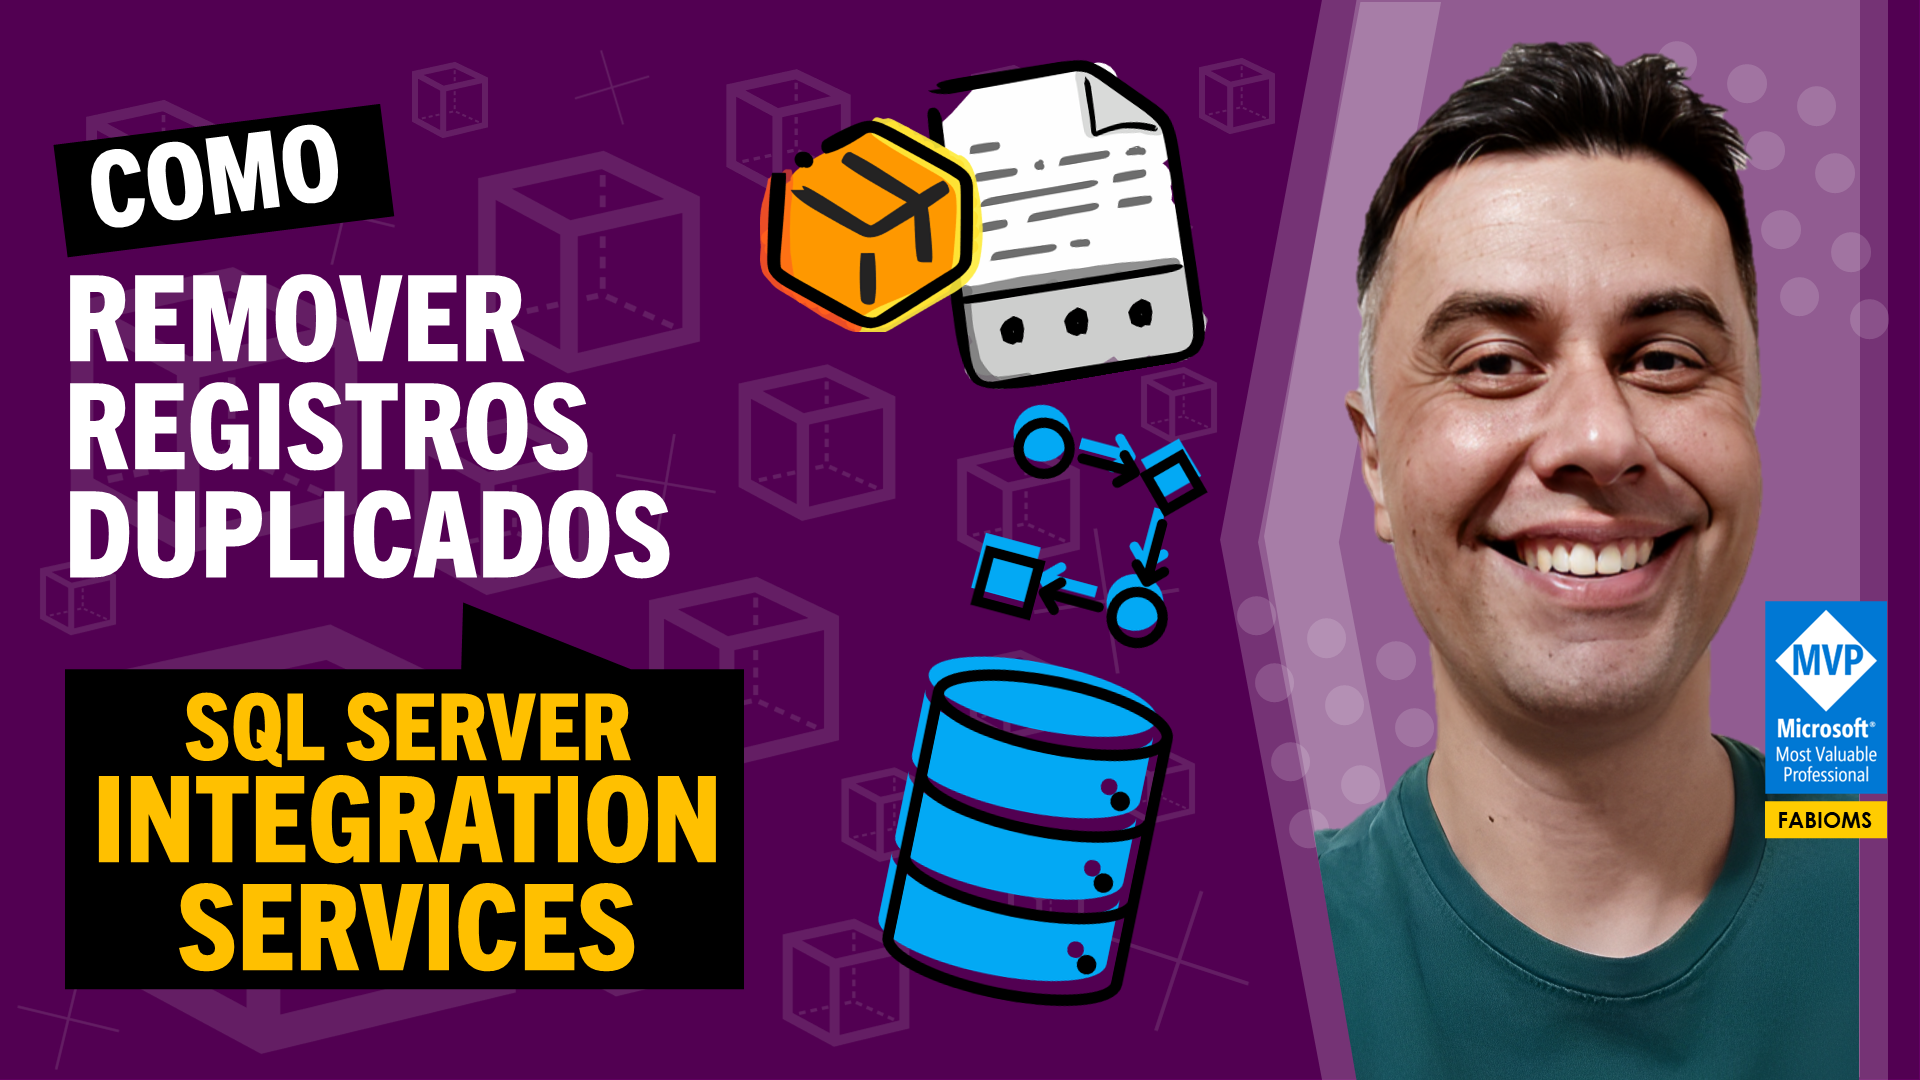 Remover registros duplicados no SQL Server Integration Services